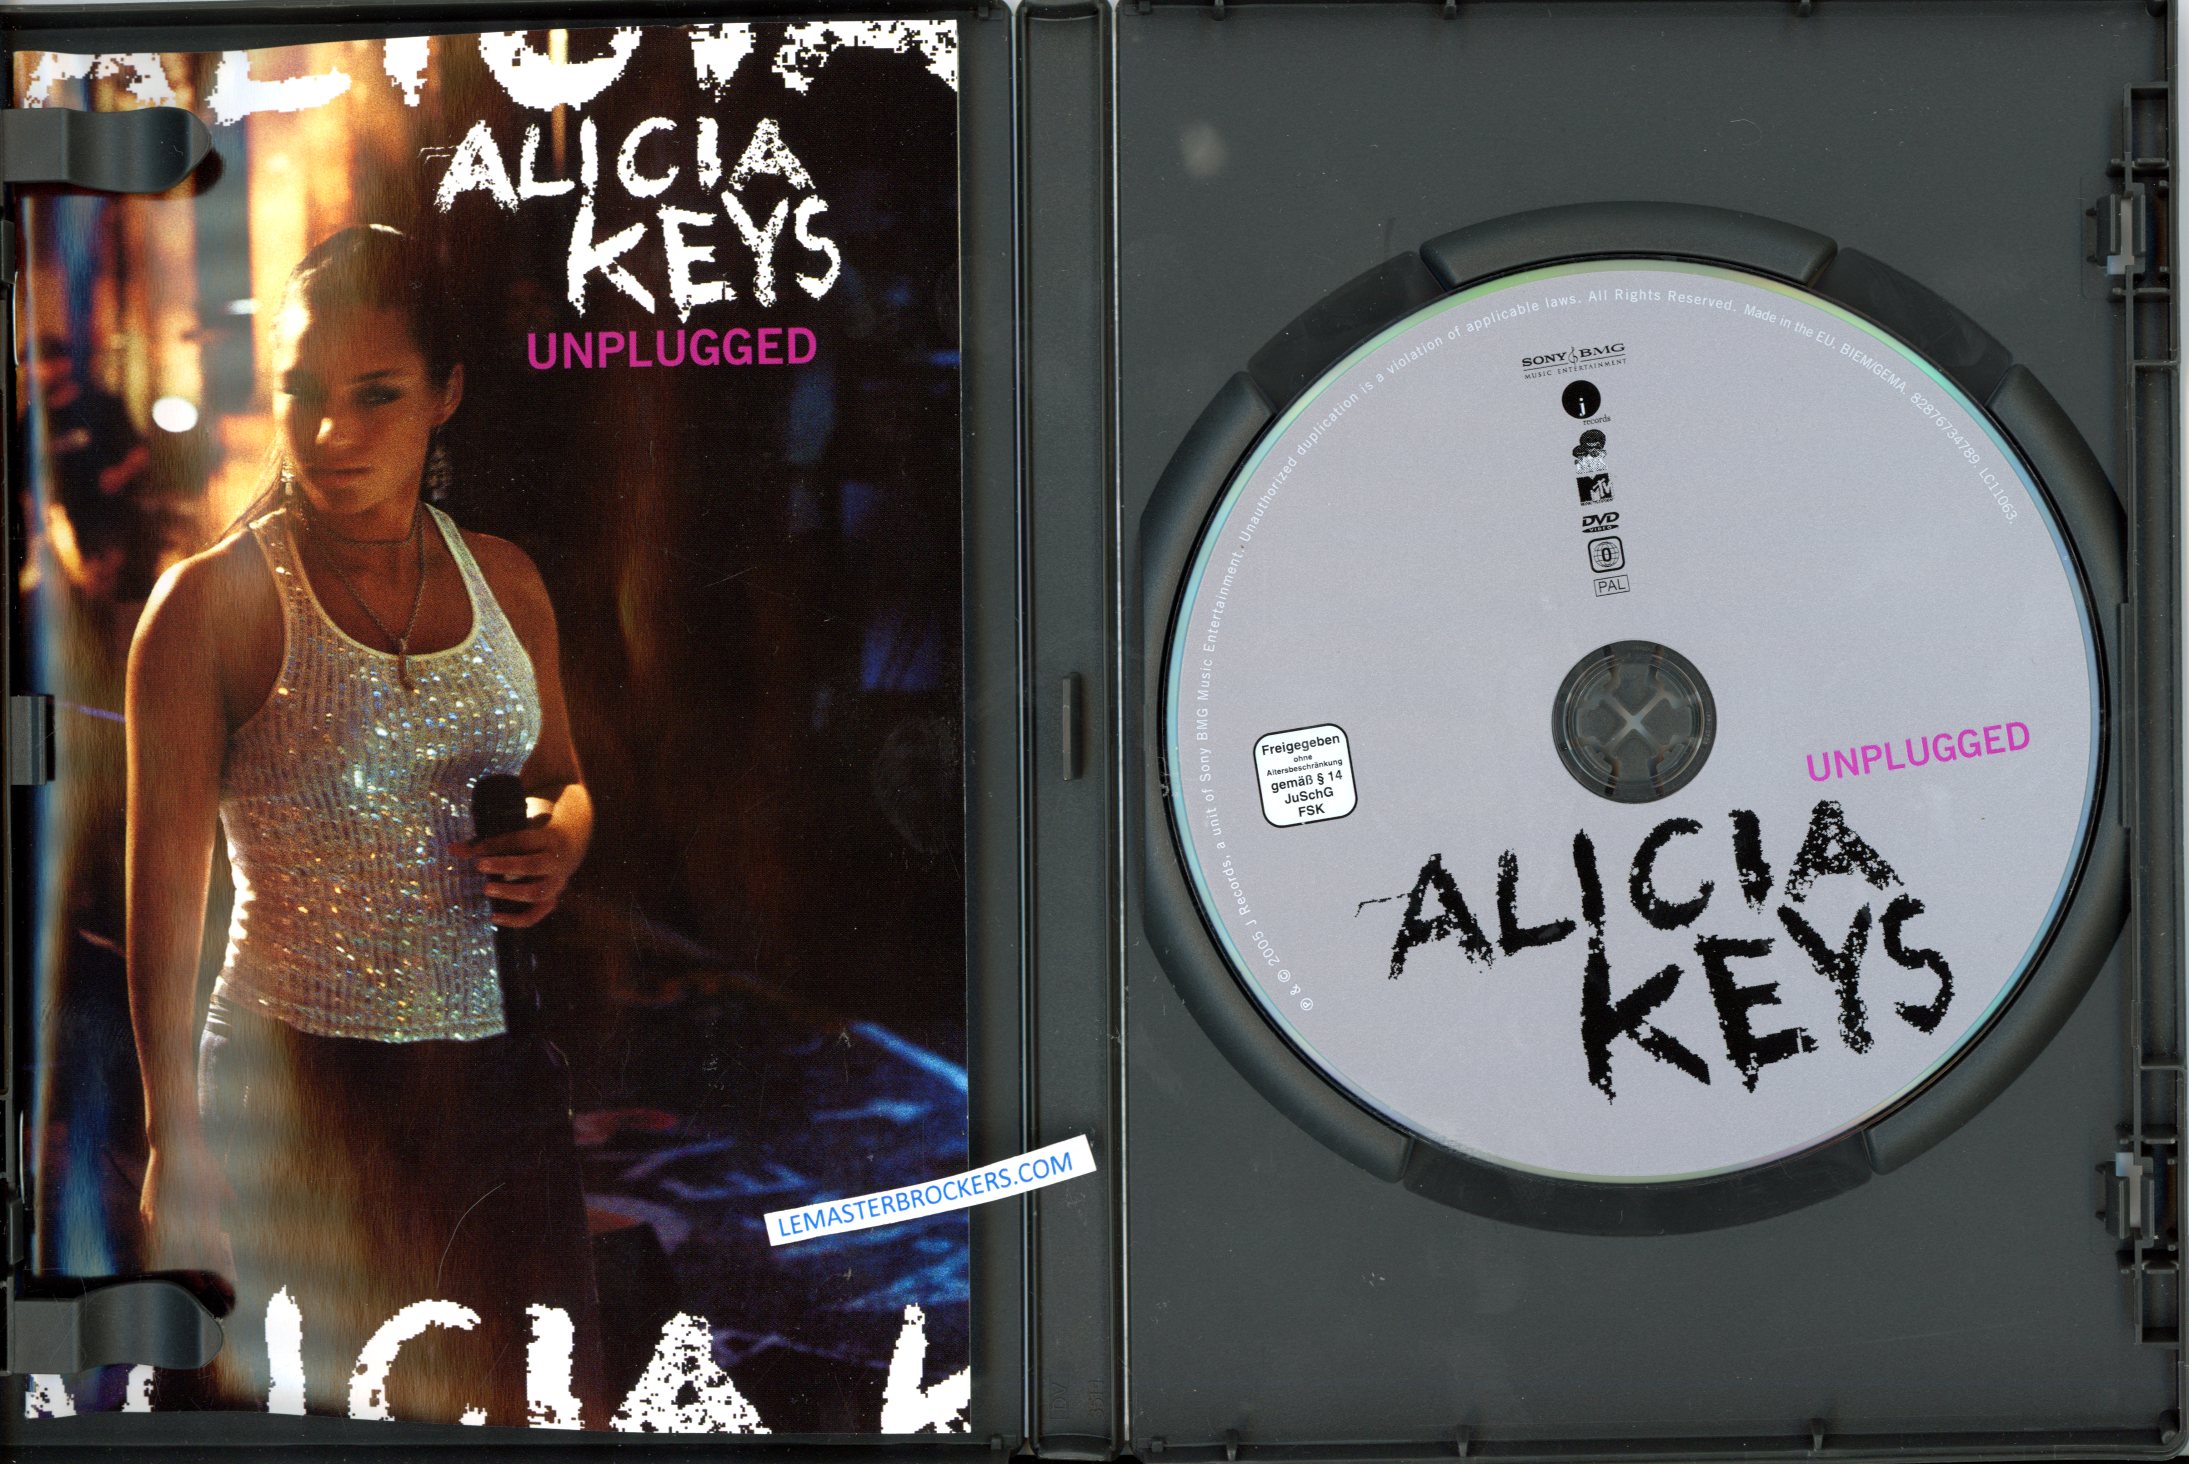 DVD OCCASION ALICIA KEYS UNPLUGGED